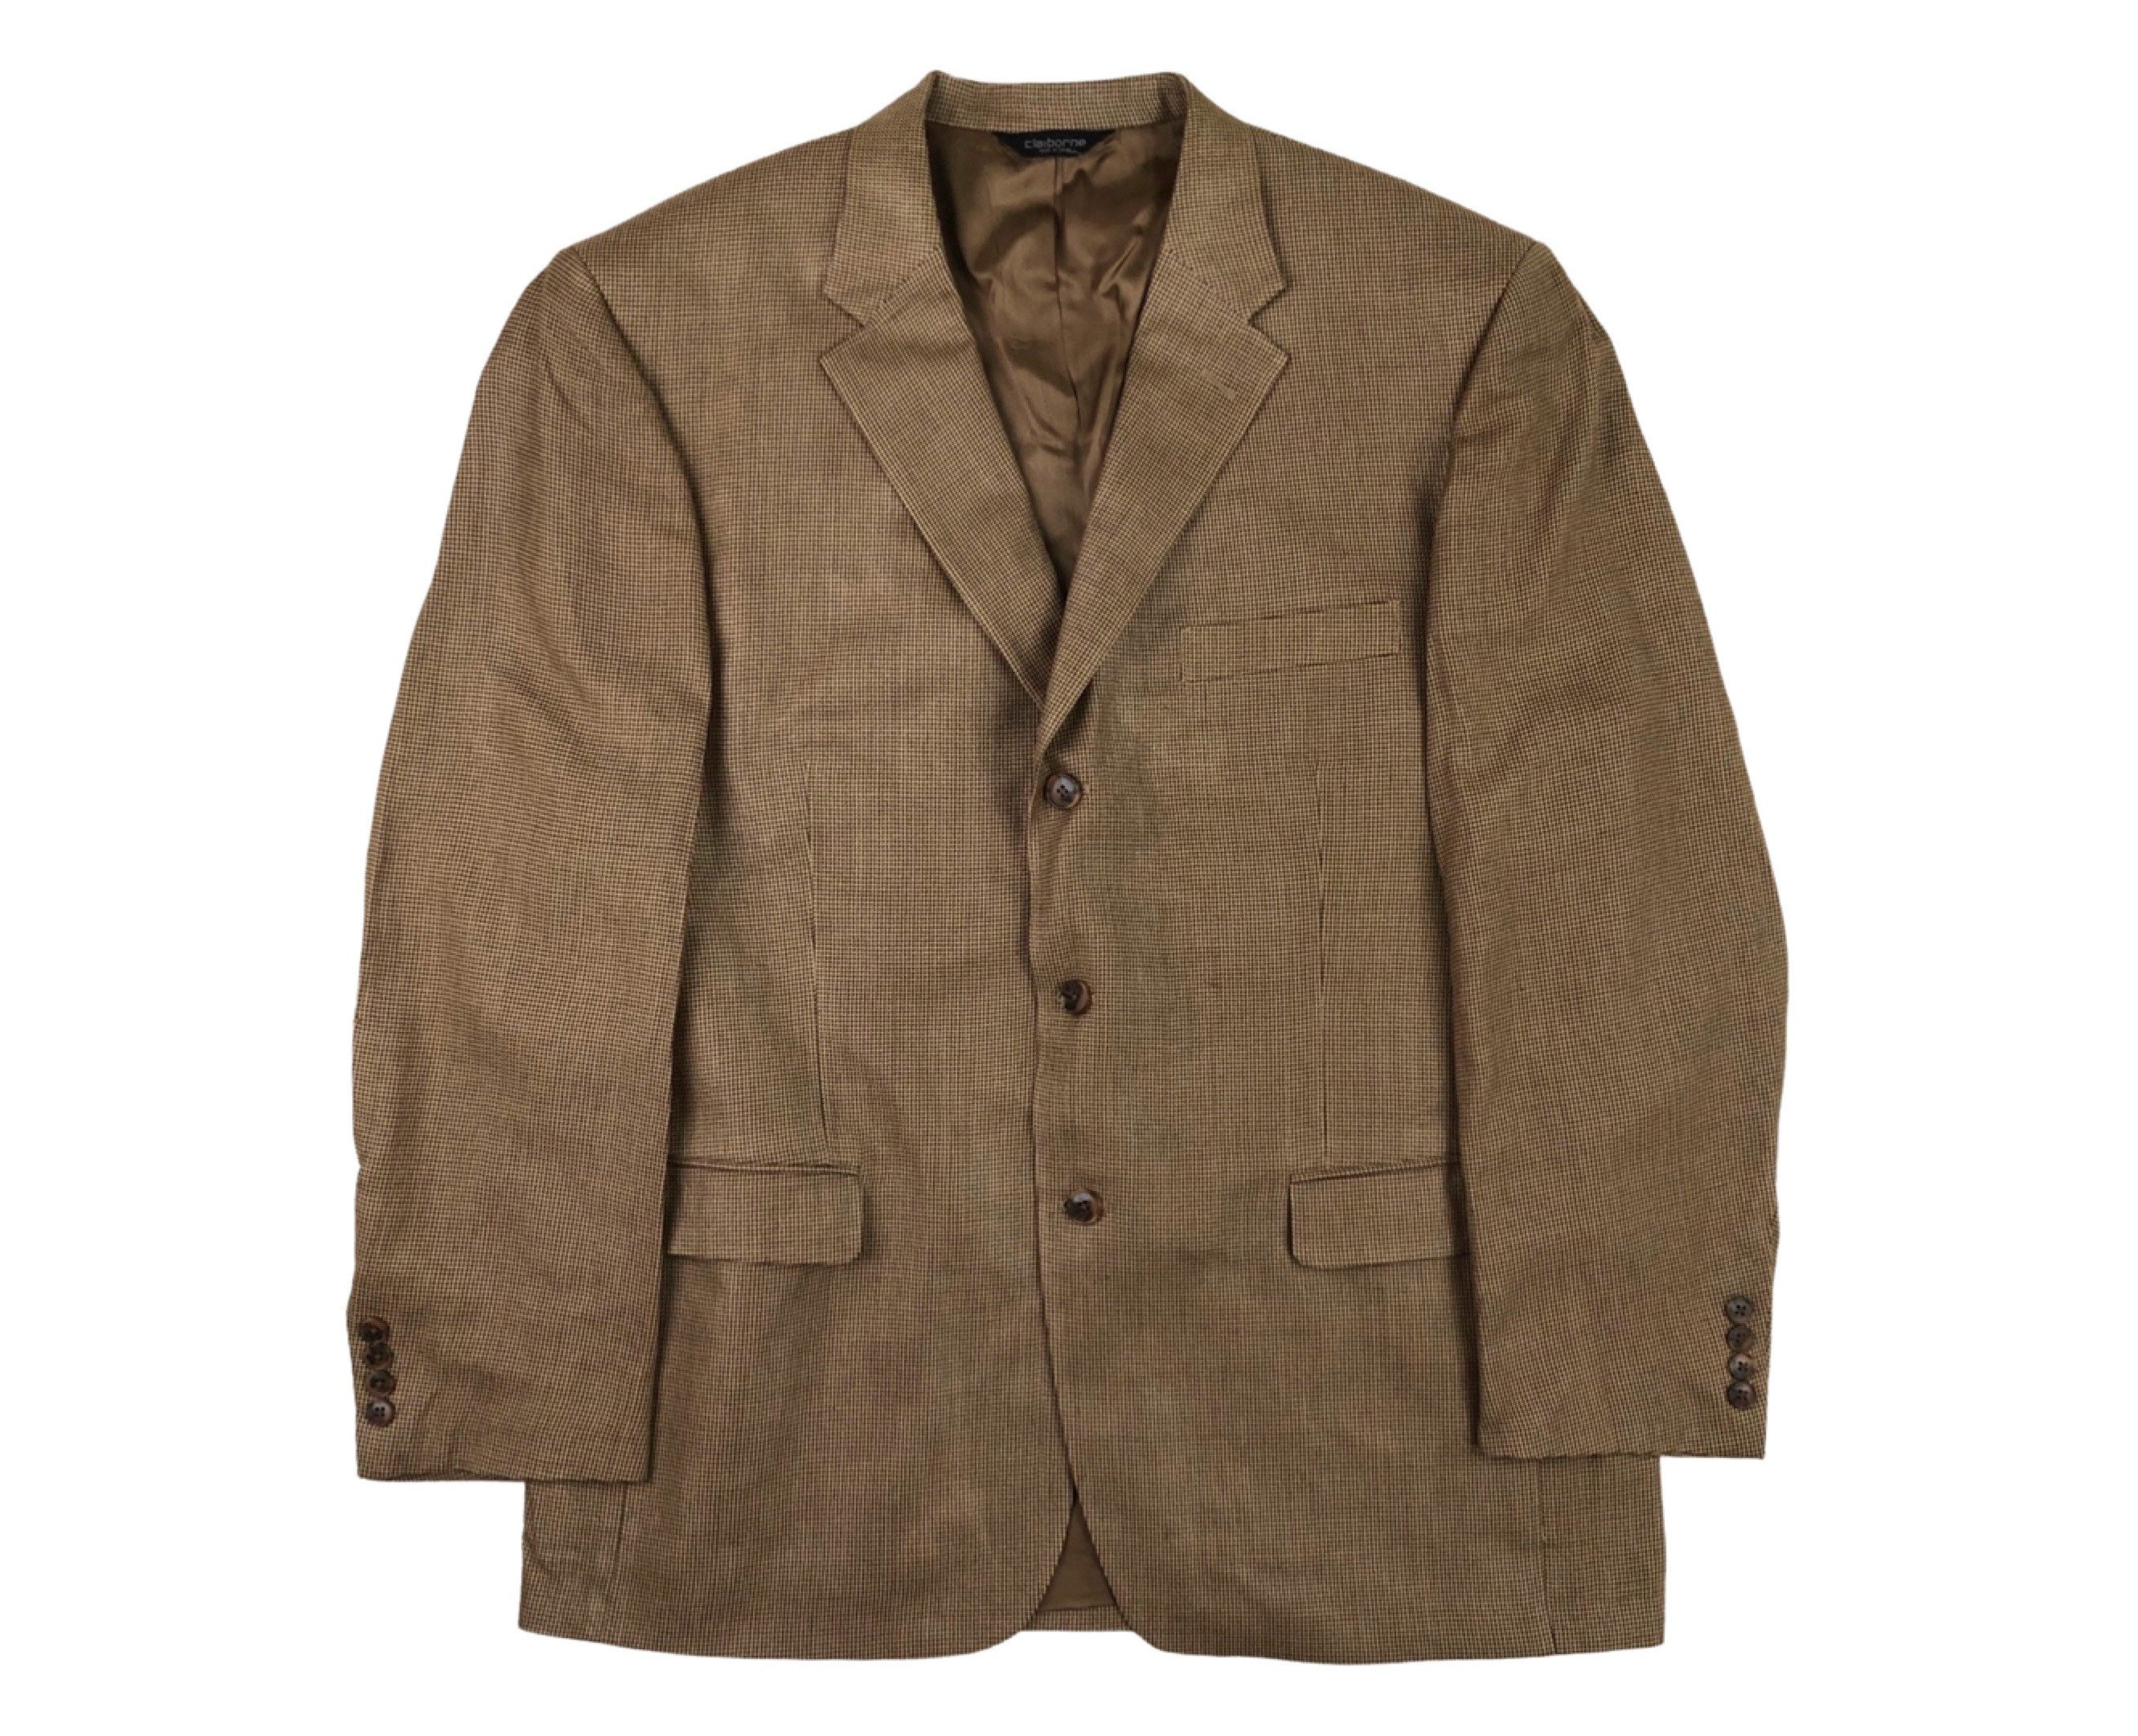 Bestfit Menswear  Men's Classic Fit Plaid Blazer 100% Wool Sport Coat